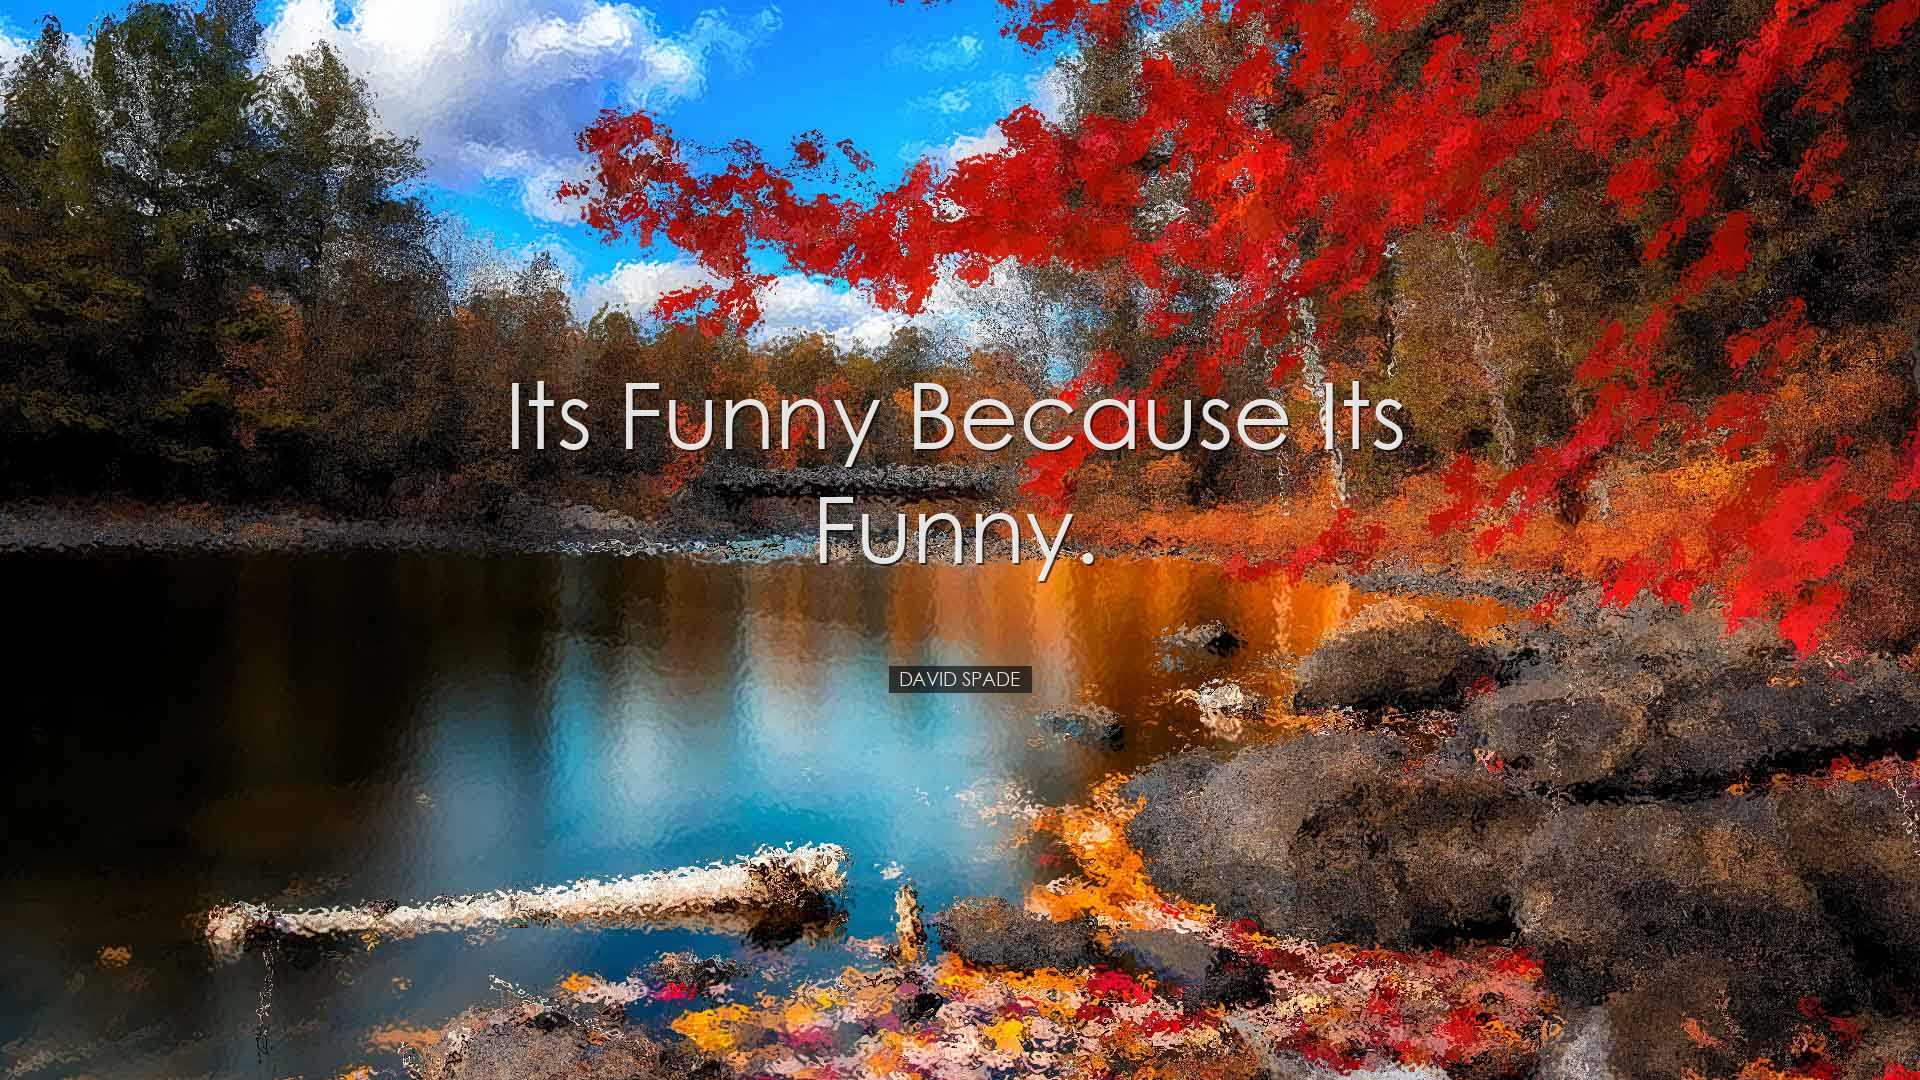 Its funny because its funny. - David Spade